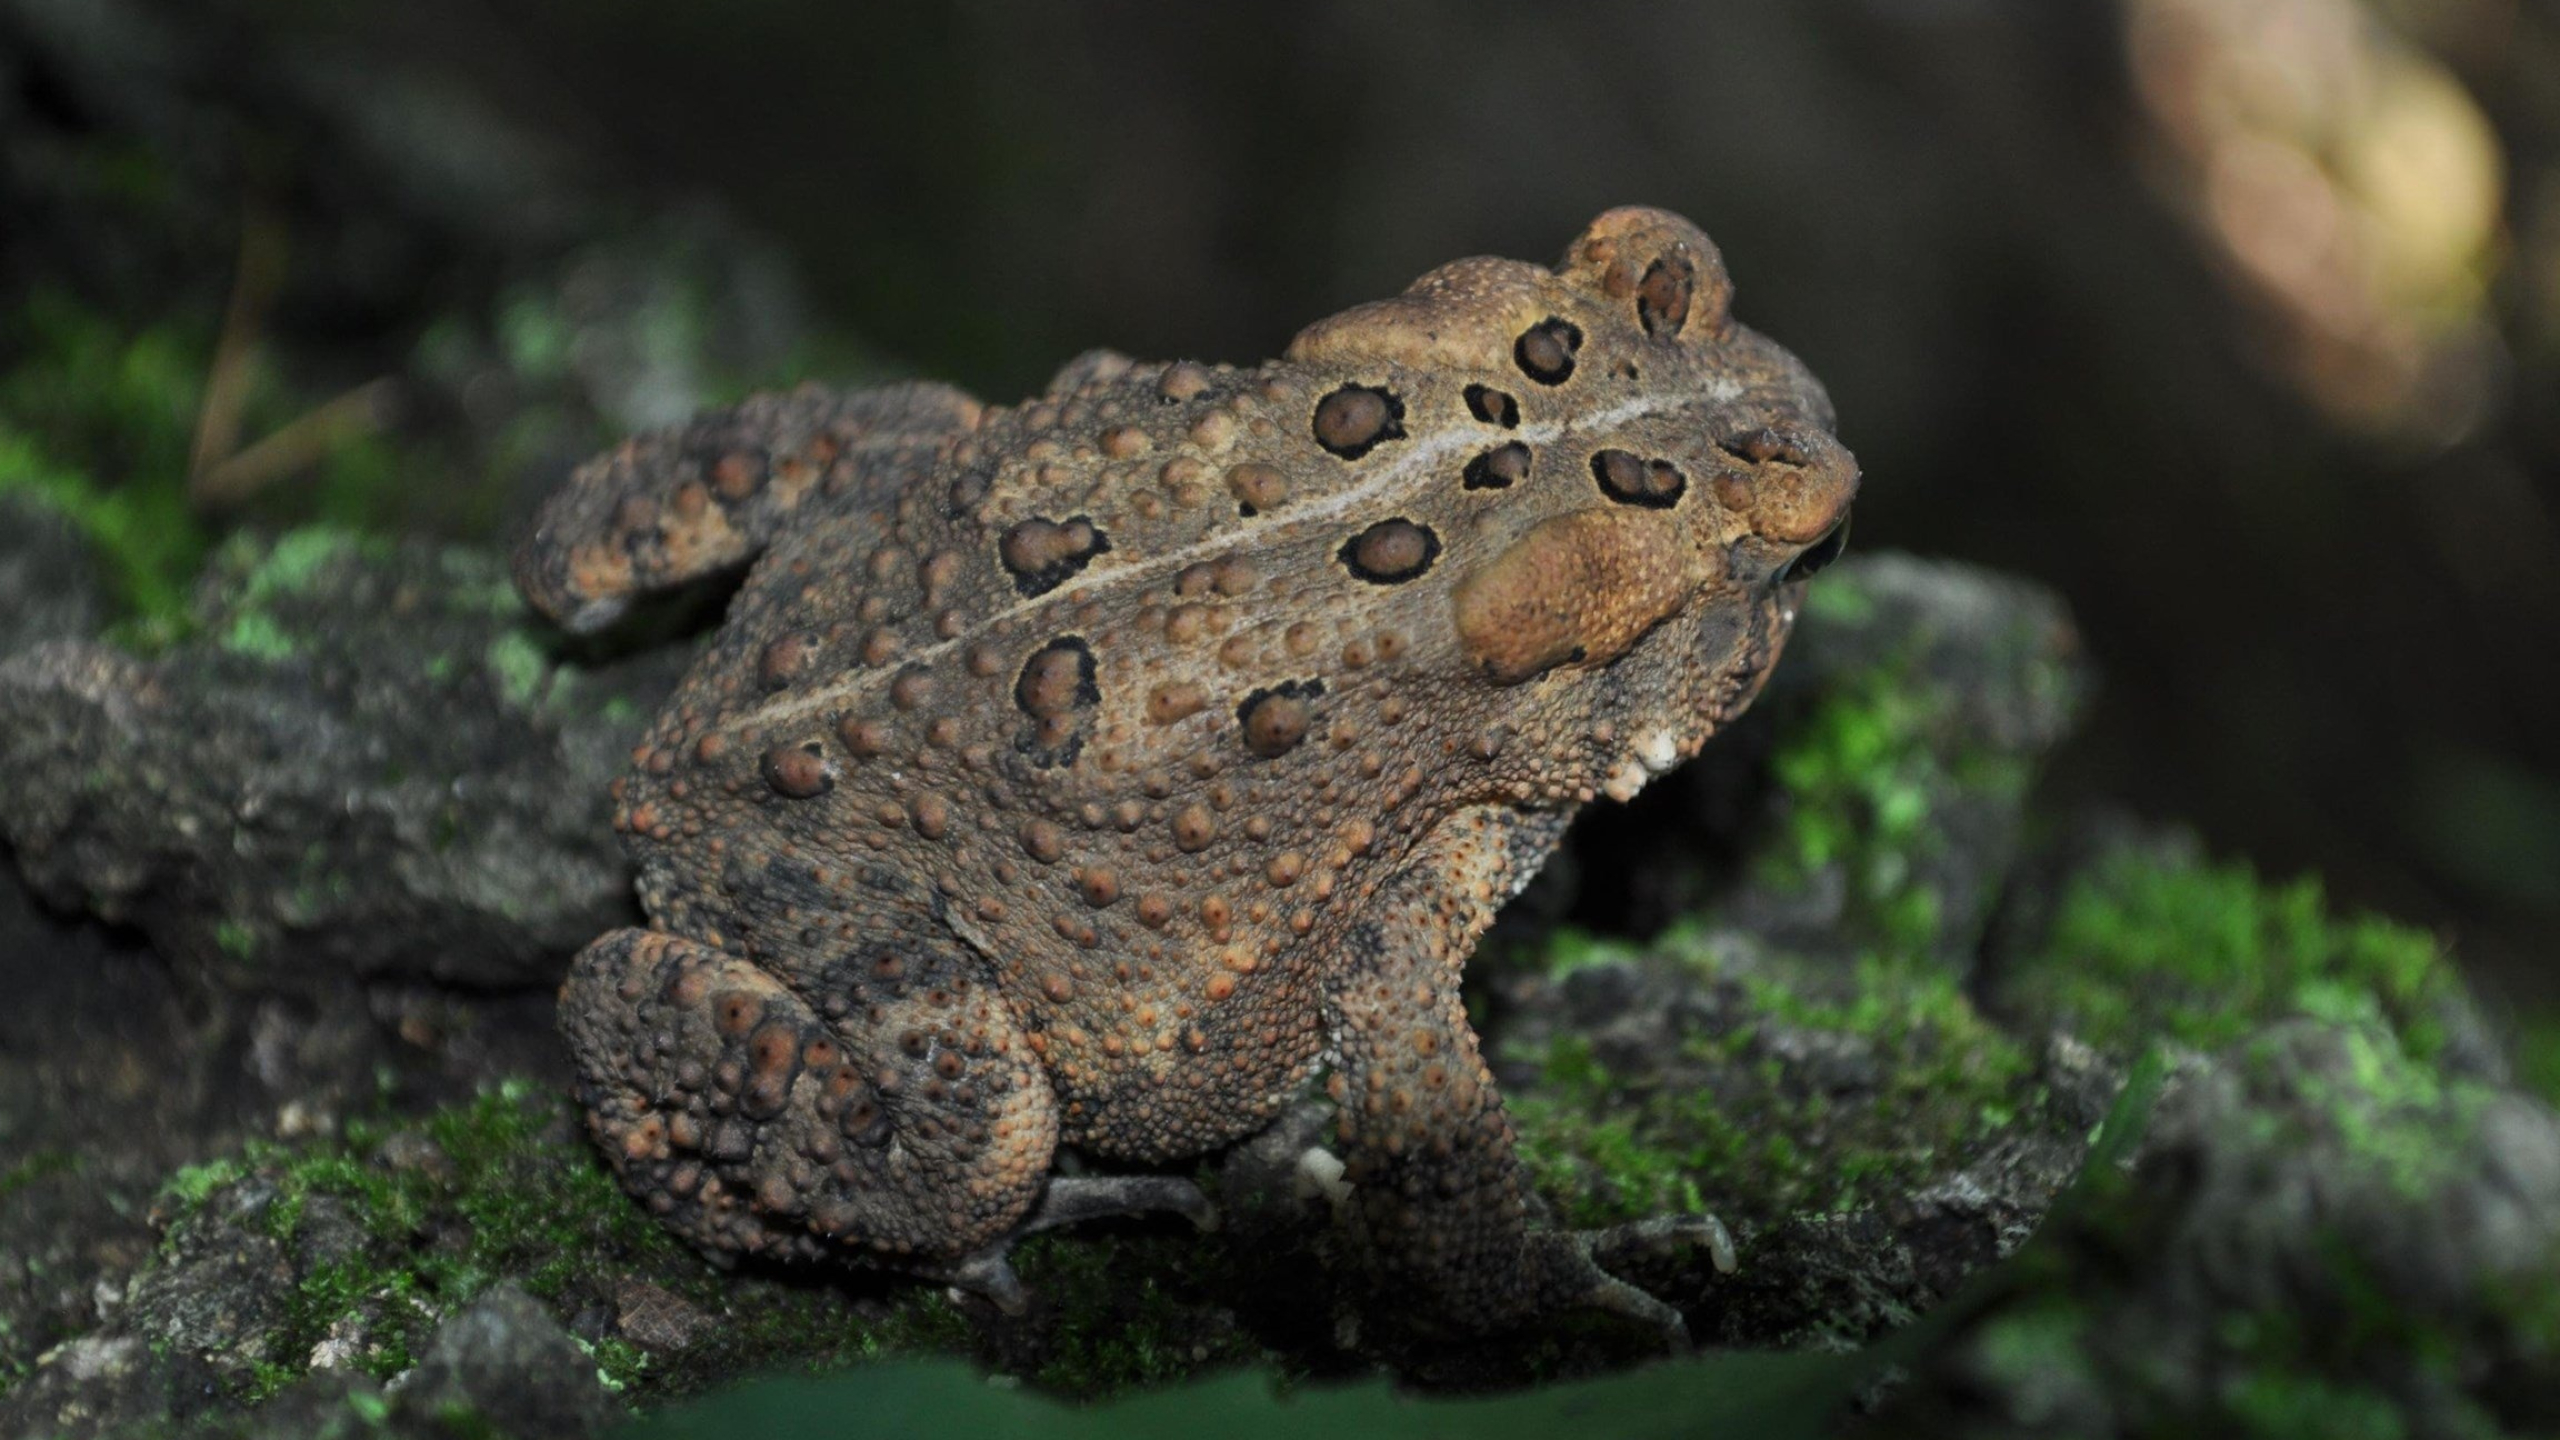 American toad, High-definition desktop wallpaper, Nature's beauty, Baltana's collection, 2560x1440 HD Desktop